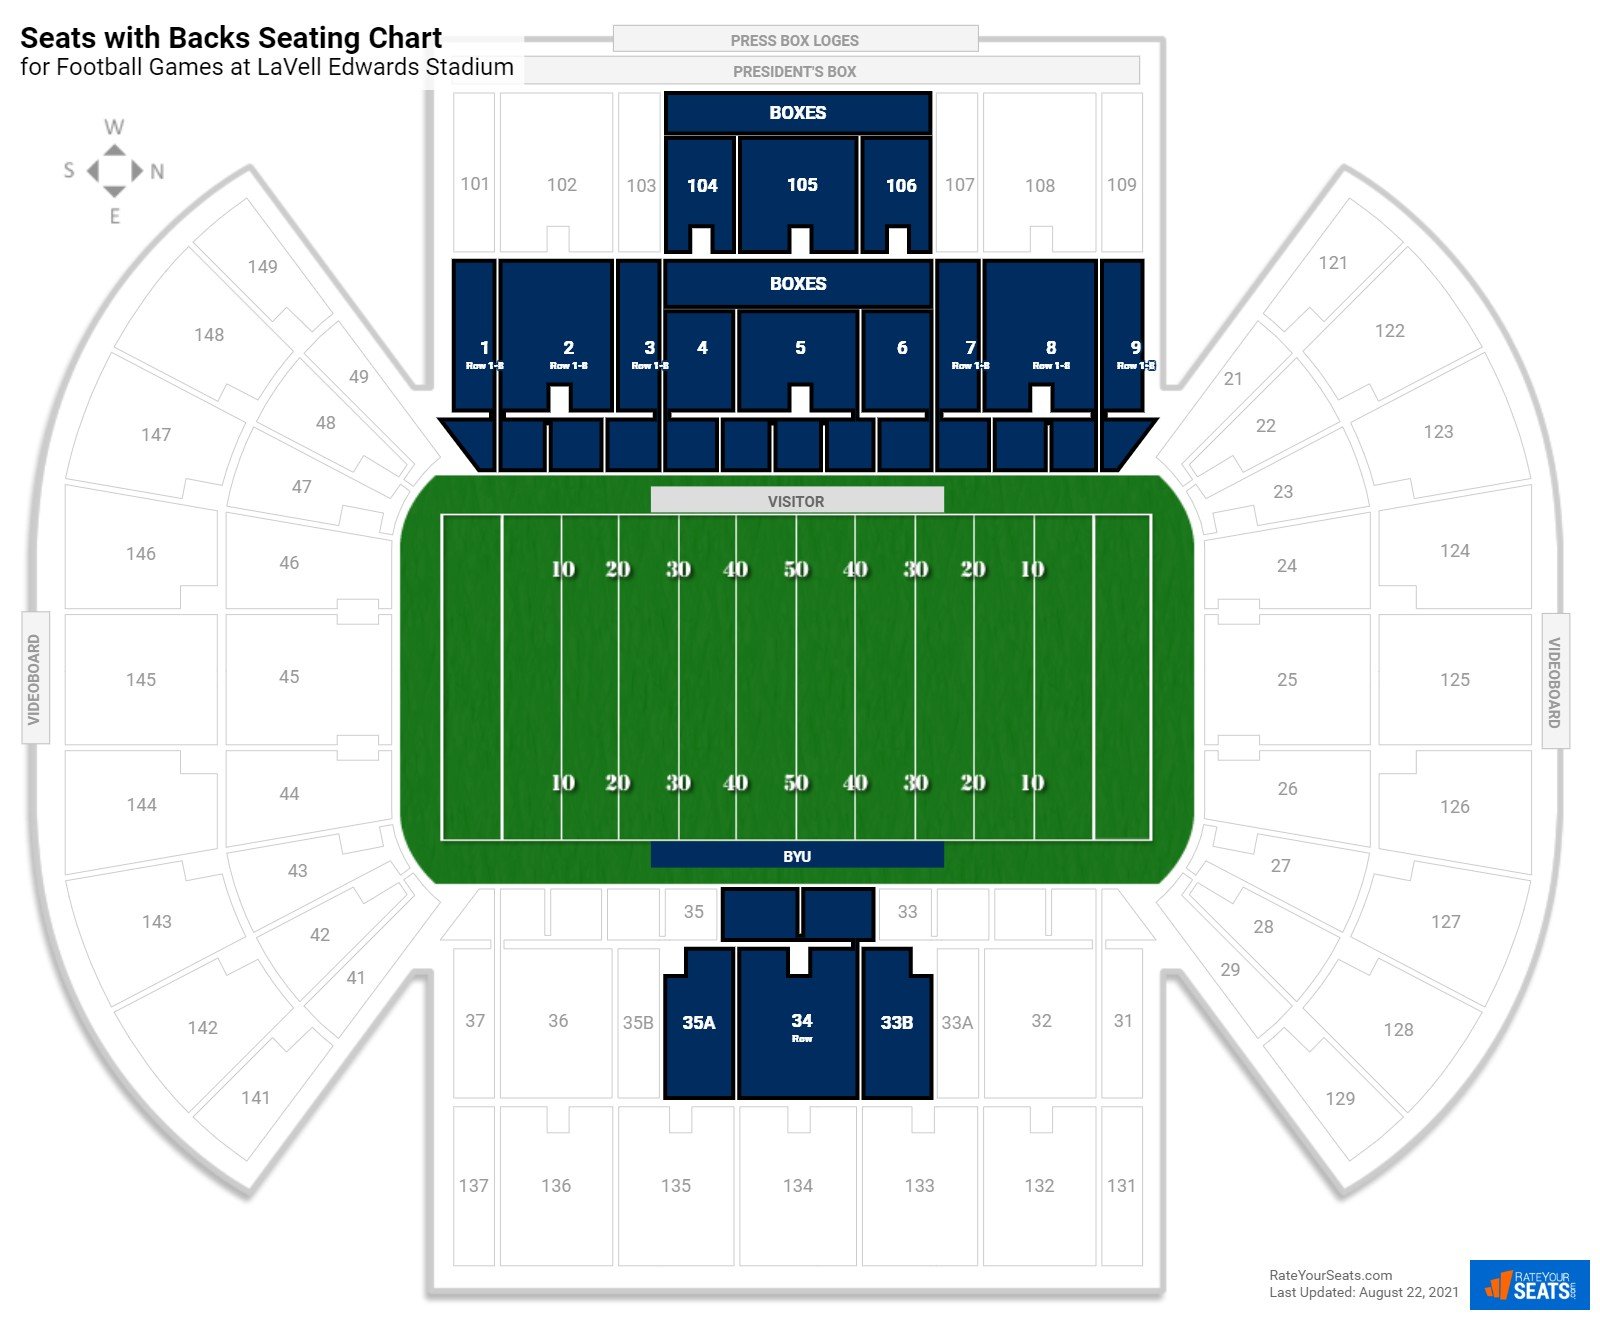 LaVell Edwards Stadium Seats with Backs - RateYourSeats.com